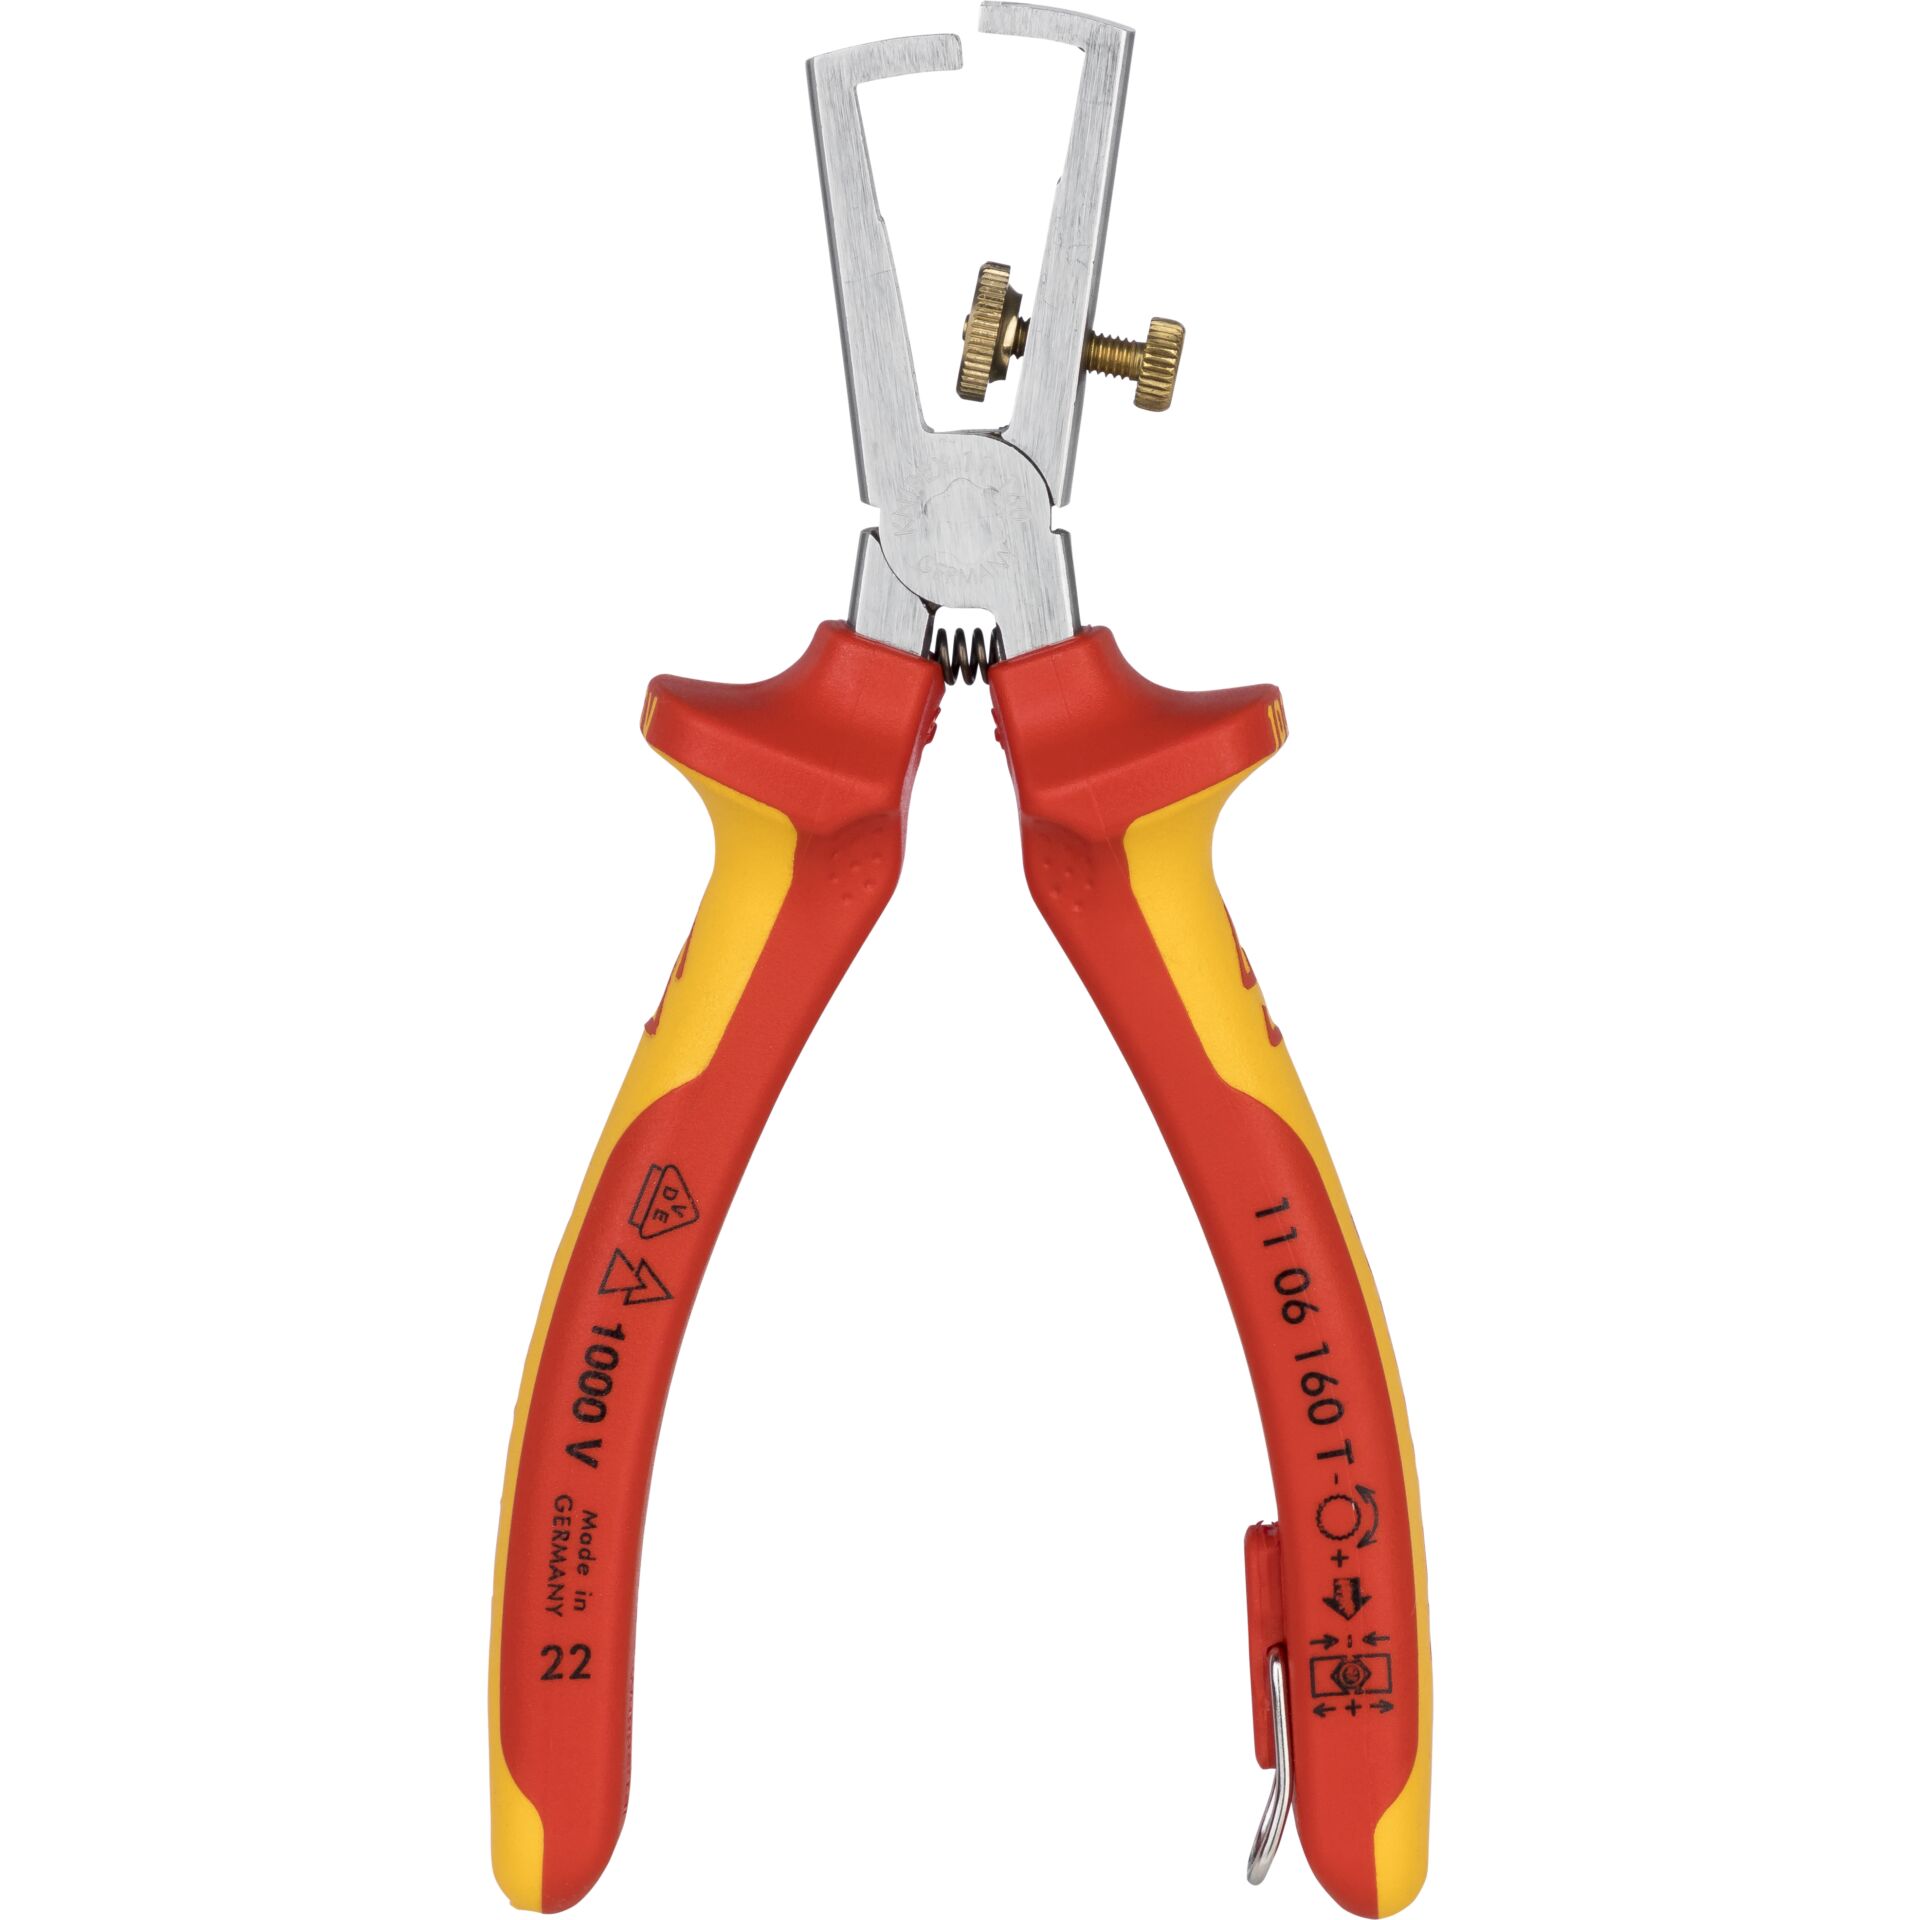 Knipex 11 06 160 T Kabel-Crimper Kombinationswerkzeug Orange, Rot, Silber